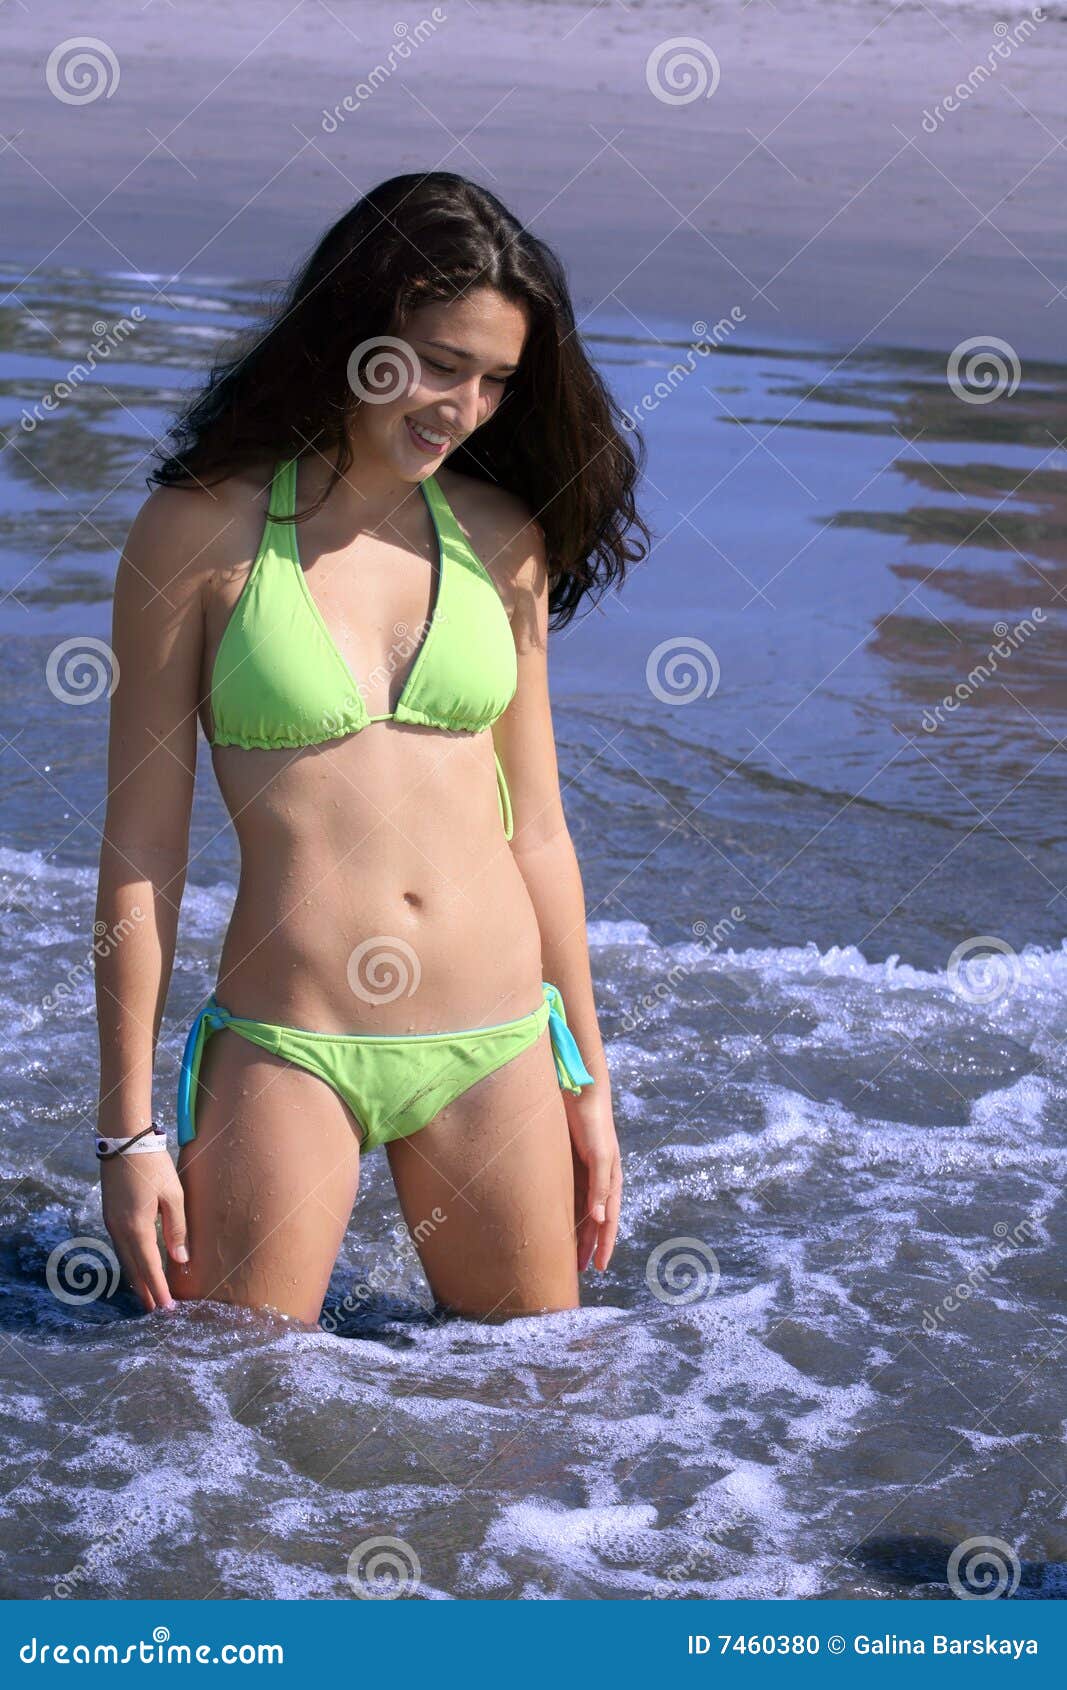 342 Bikini Tweens Royalty-Free Images, Stock Photos & Pictures